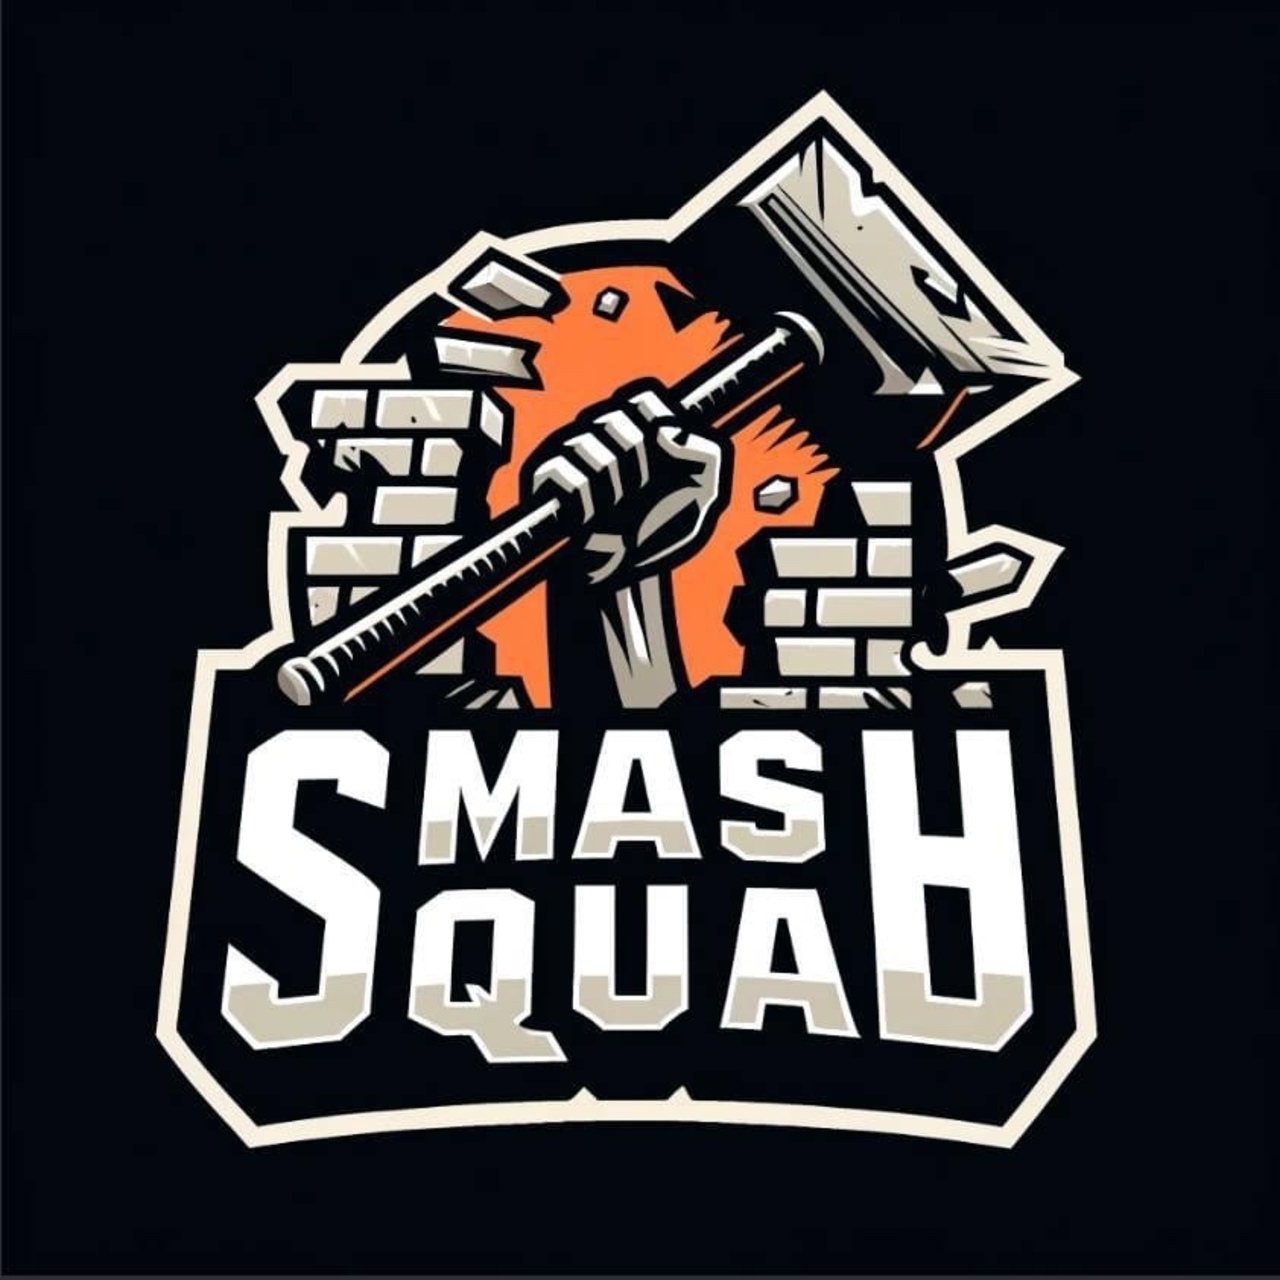 Smash Squad's logo